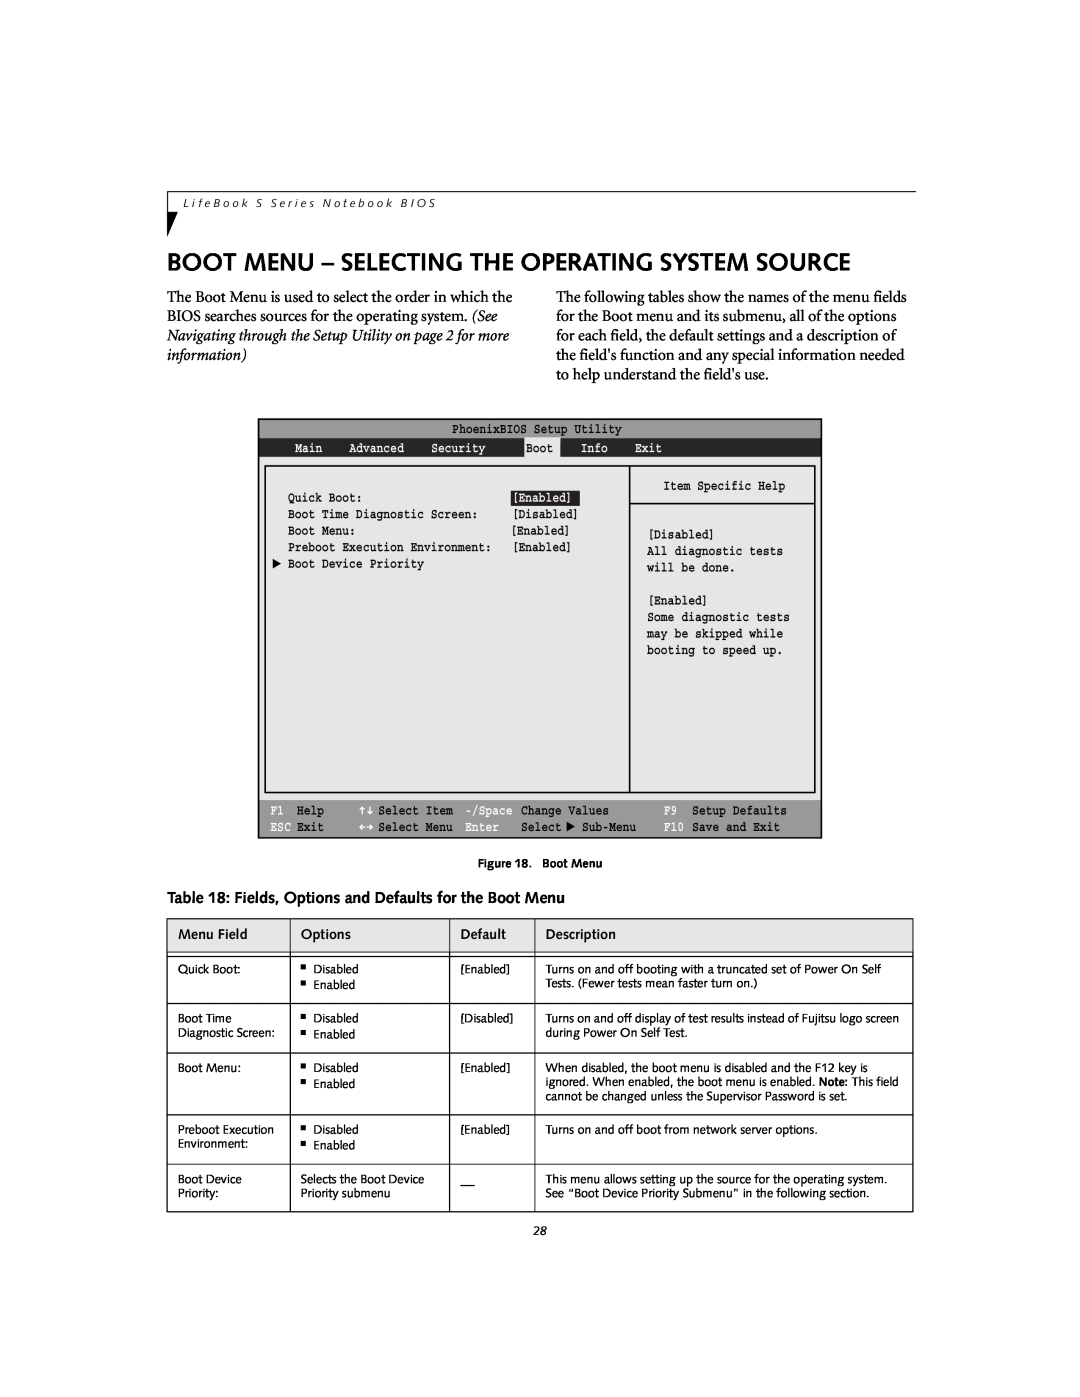 Fujitsu Siemens Computers S7110 manual Boot Menu - Selecting The Operating System Source 